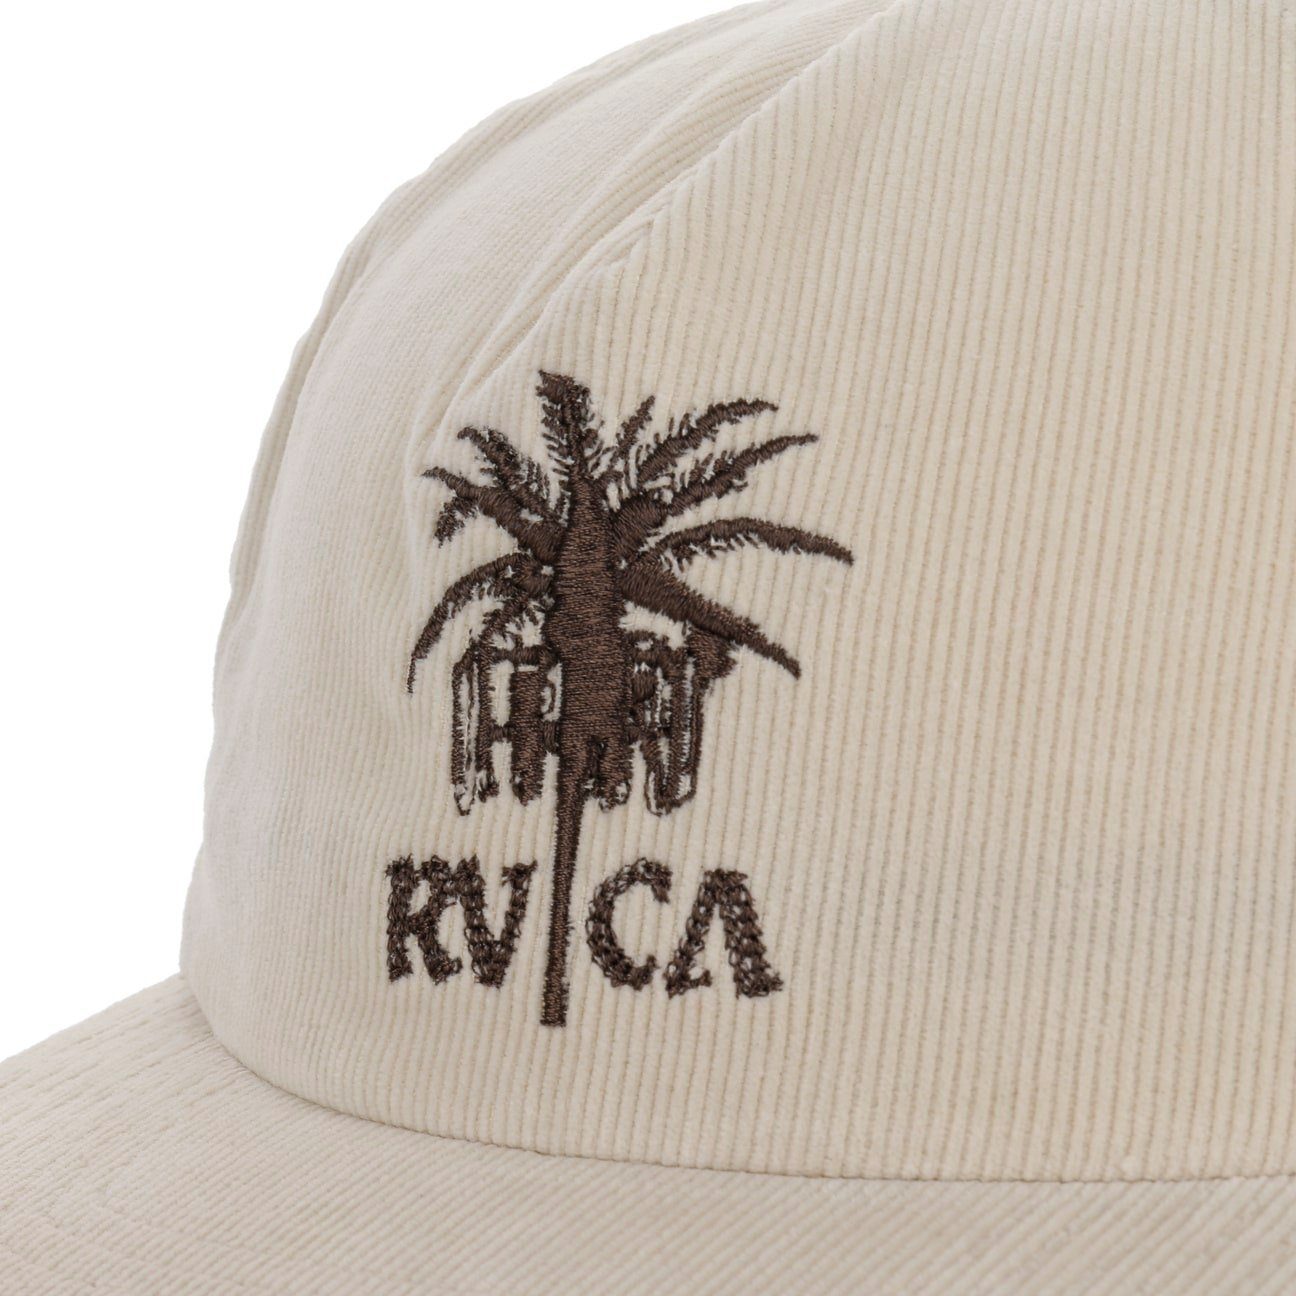 RVCA Baseball Cap (1-St) Basecap Metallschnalle